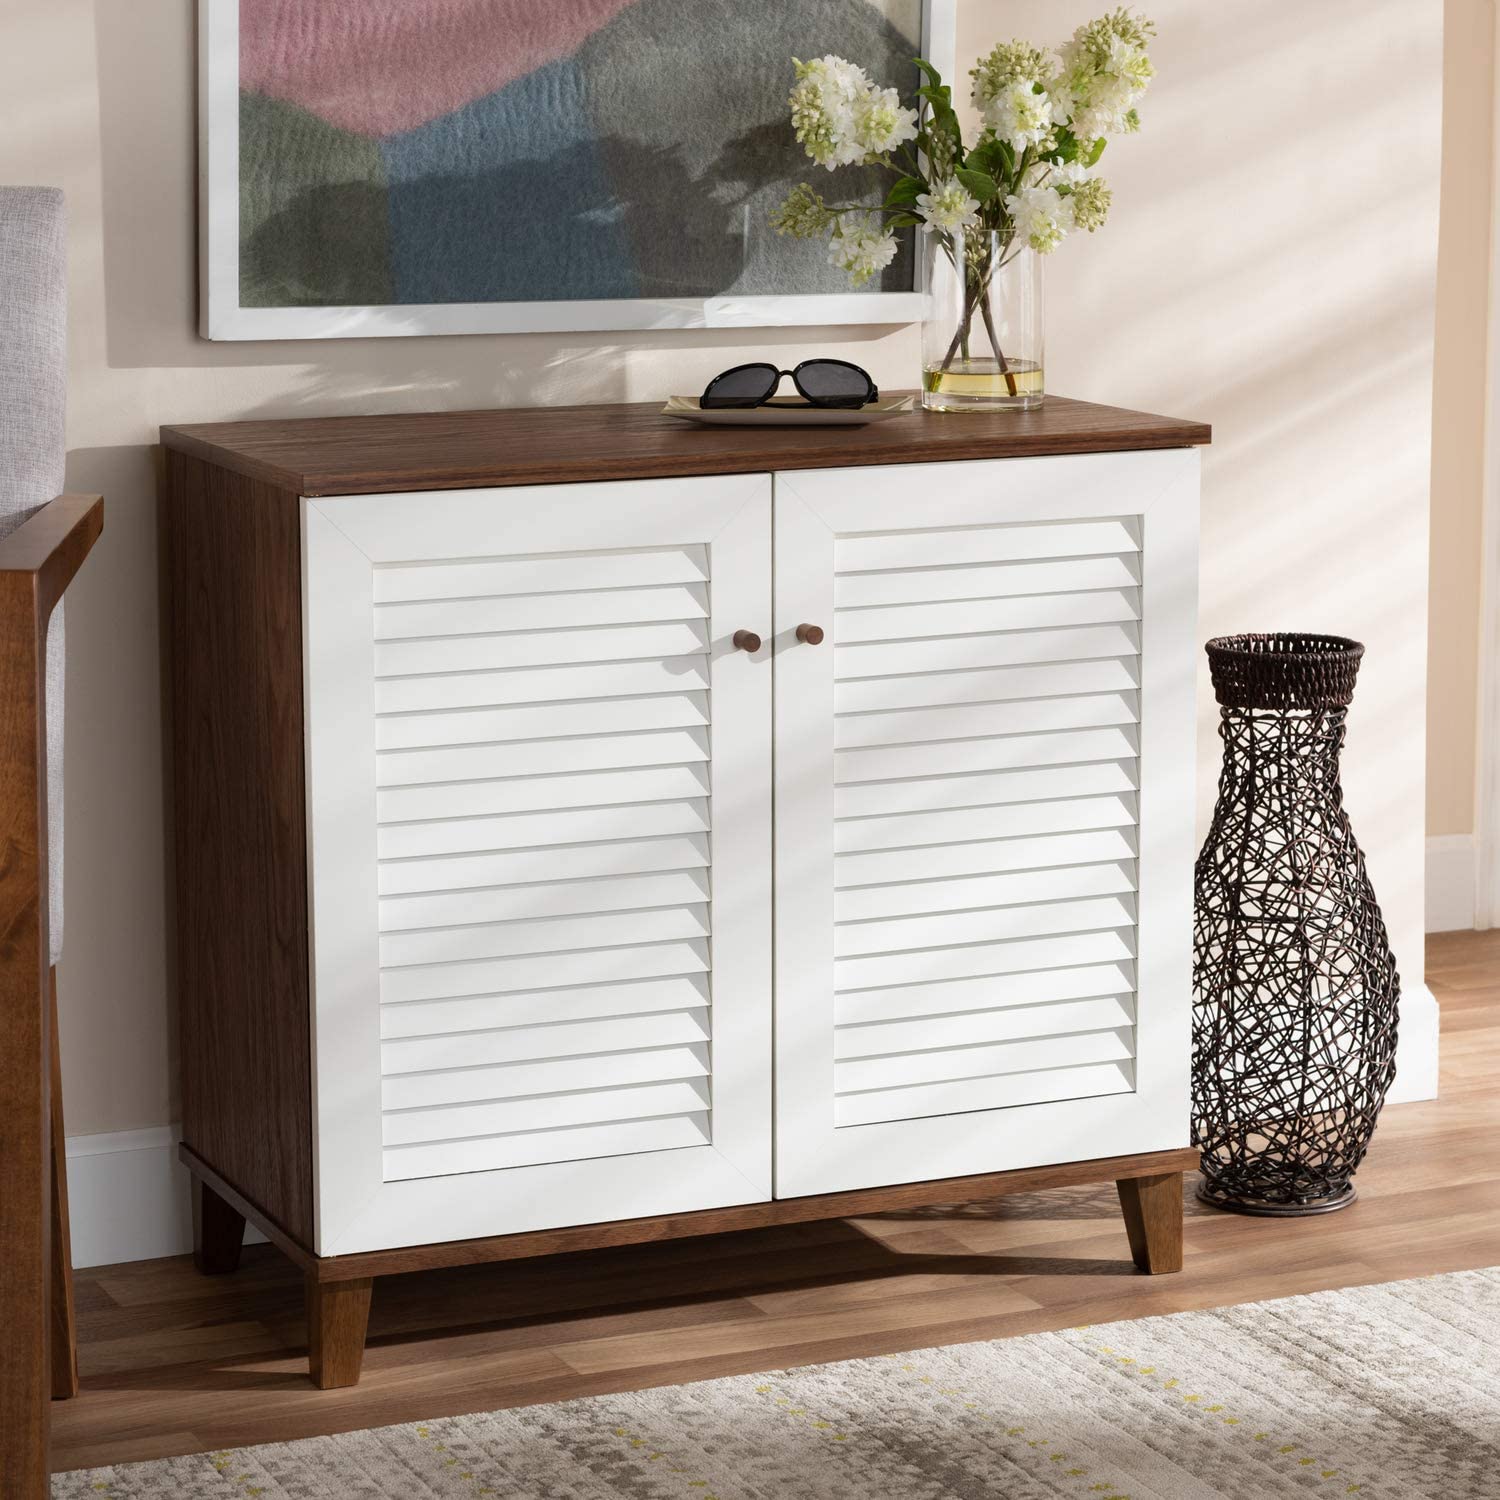 Baxton Studio Coolidge Modern and Contemporary White and Walnut Finished 4-Shelf Wood Shoe Storage Cabinet